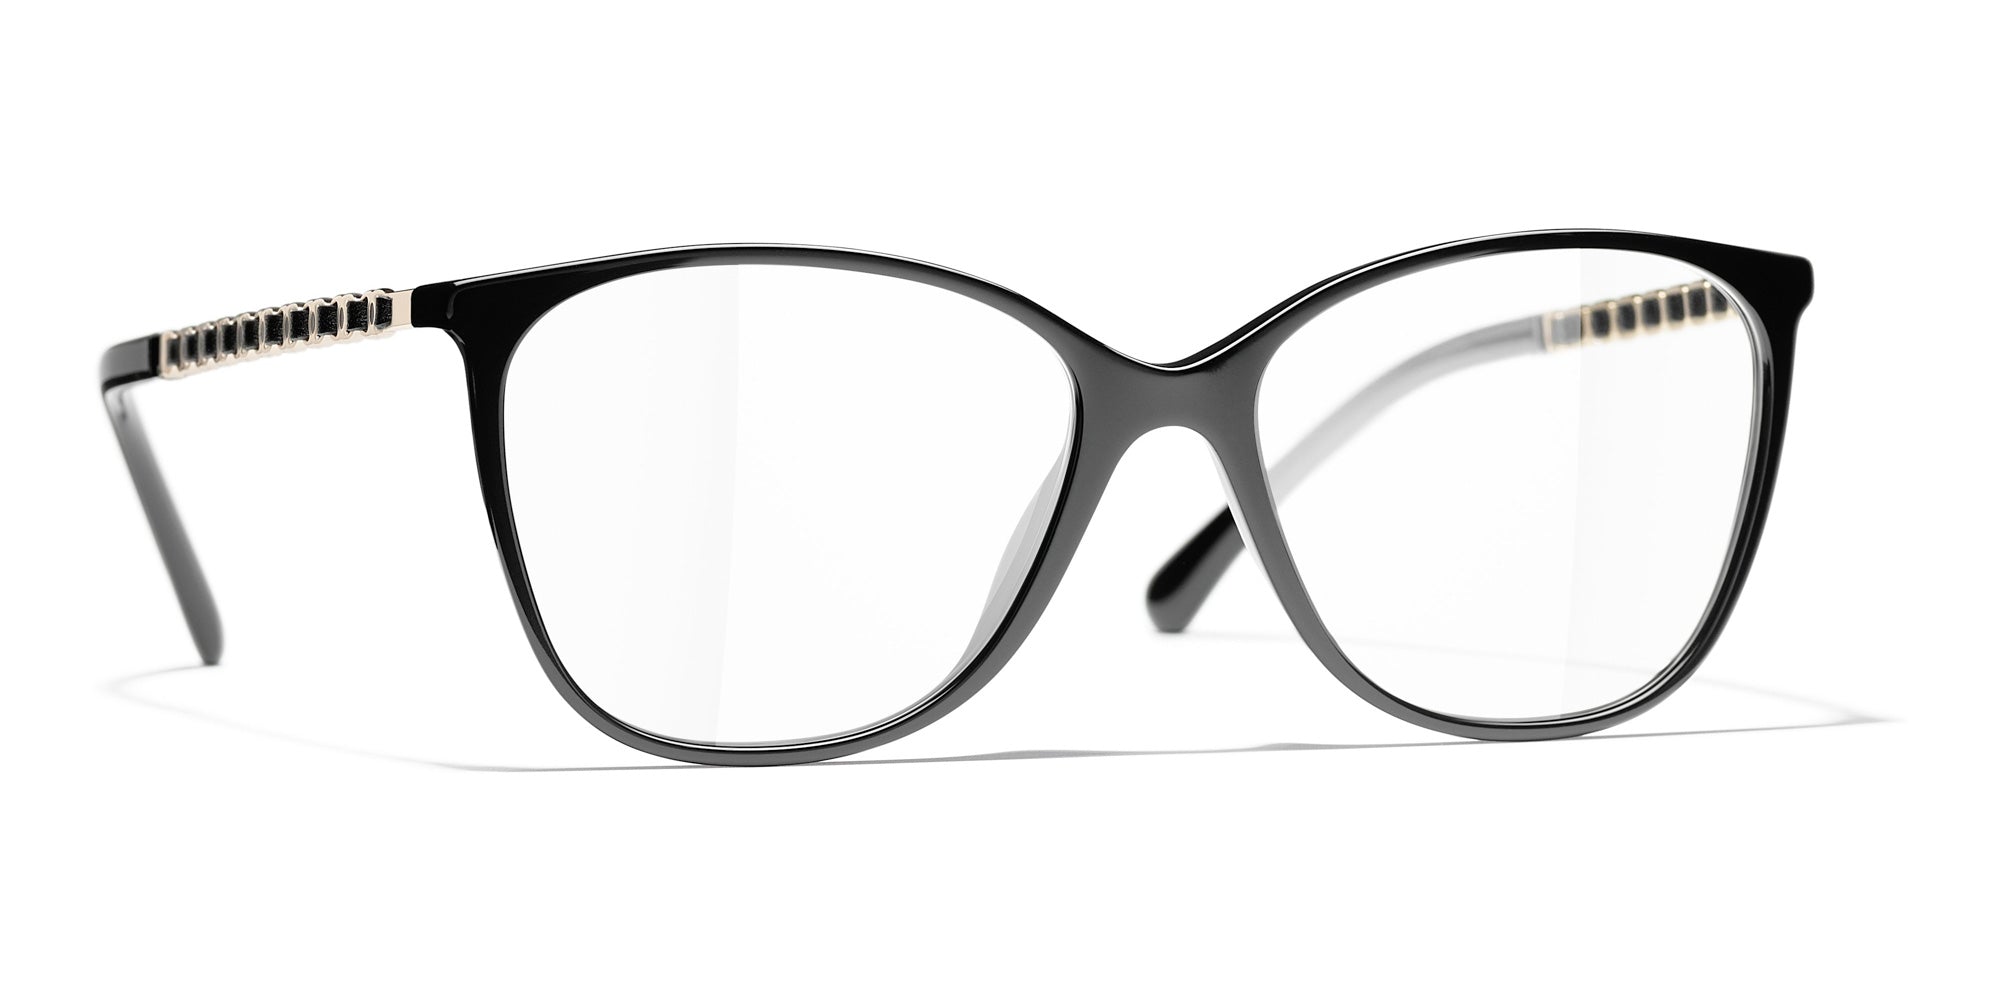 Fashionista Favorites – Chunky Cat Eye Glasses Edition